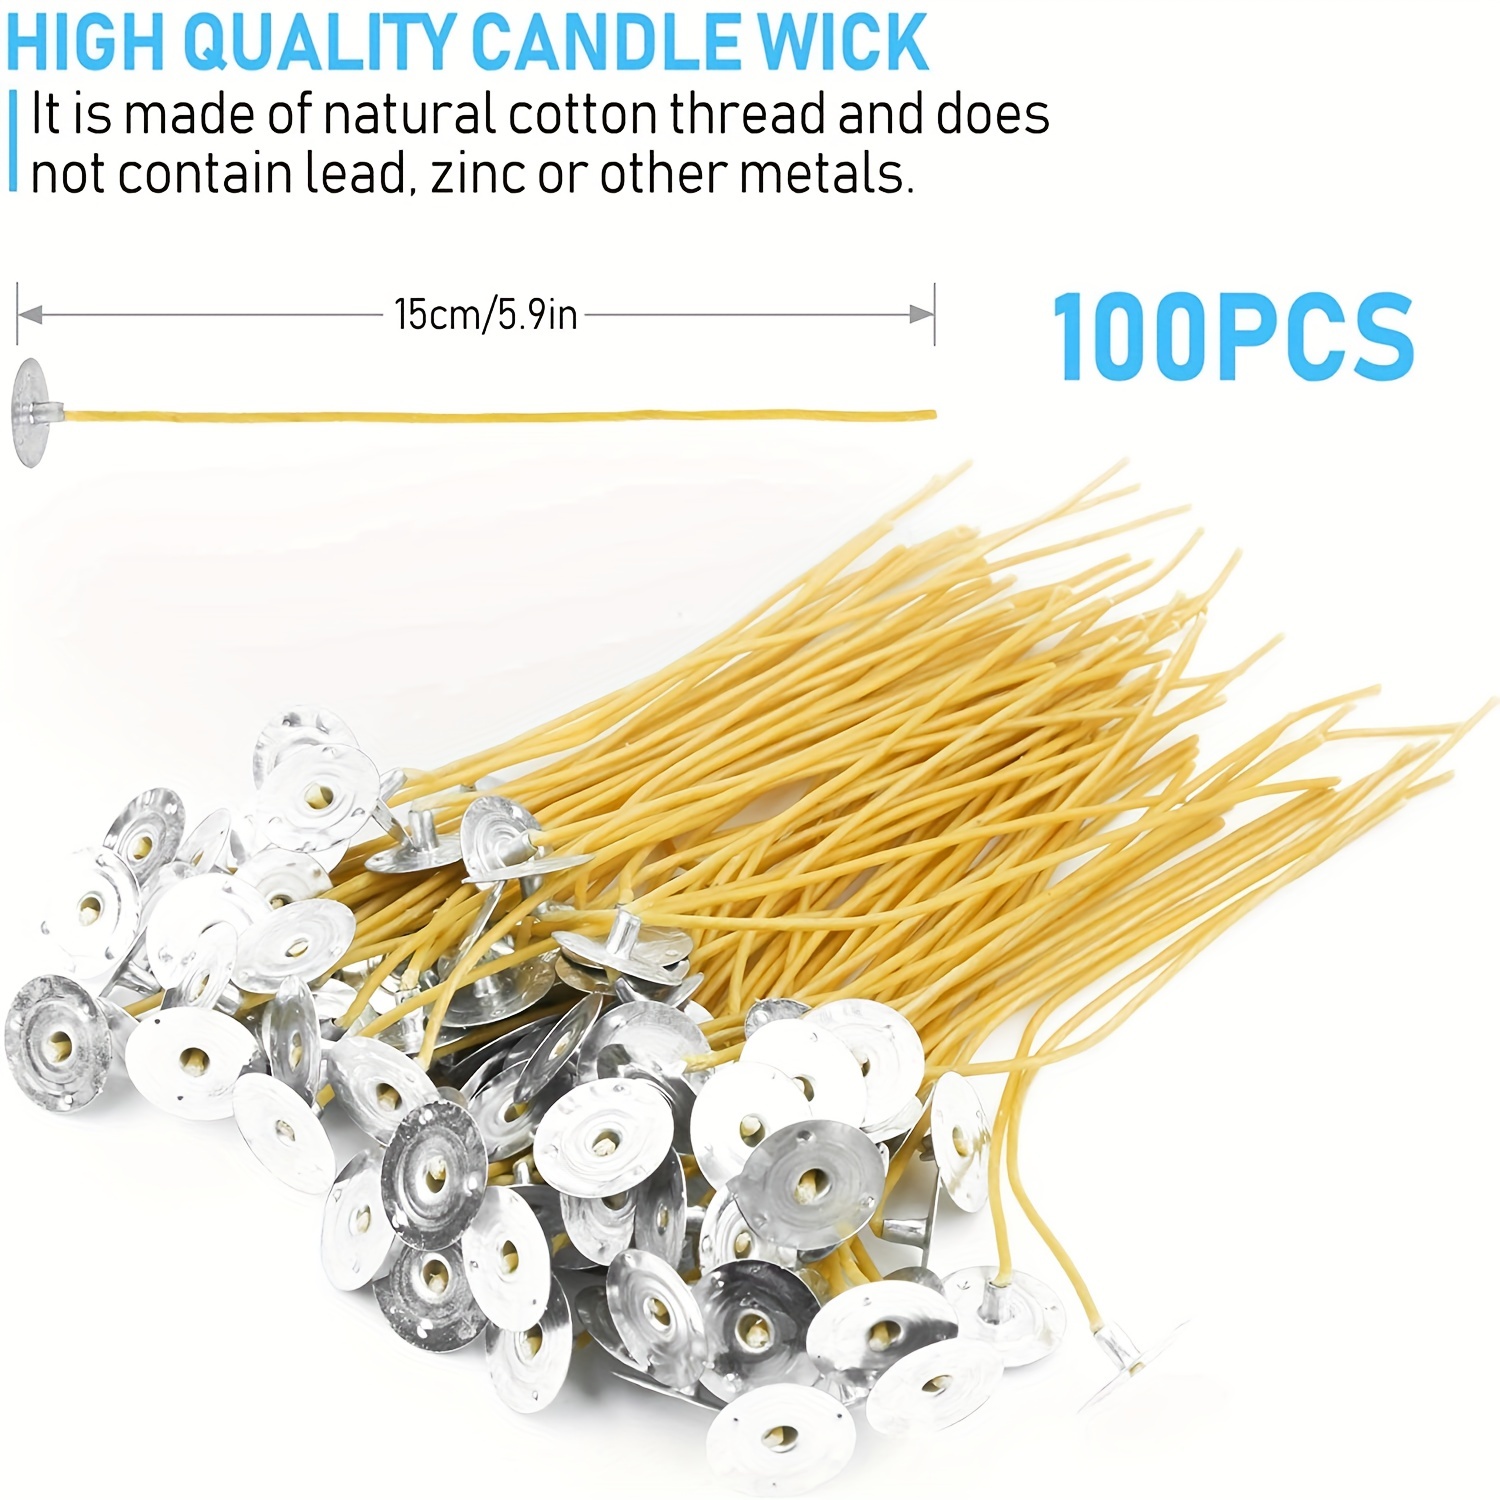  100 PCS 8 inch Hemp Candle Wicks kit, 2.5mm Beeswax